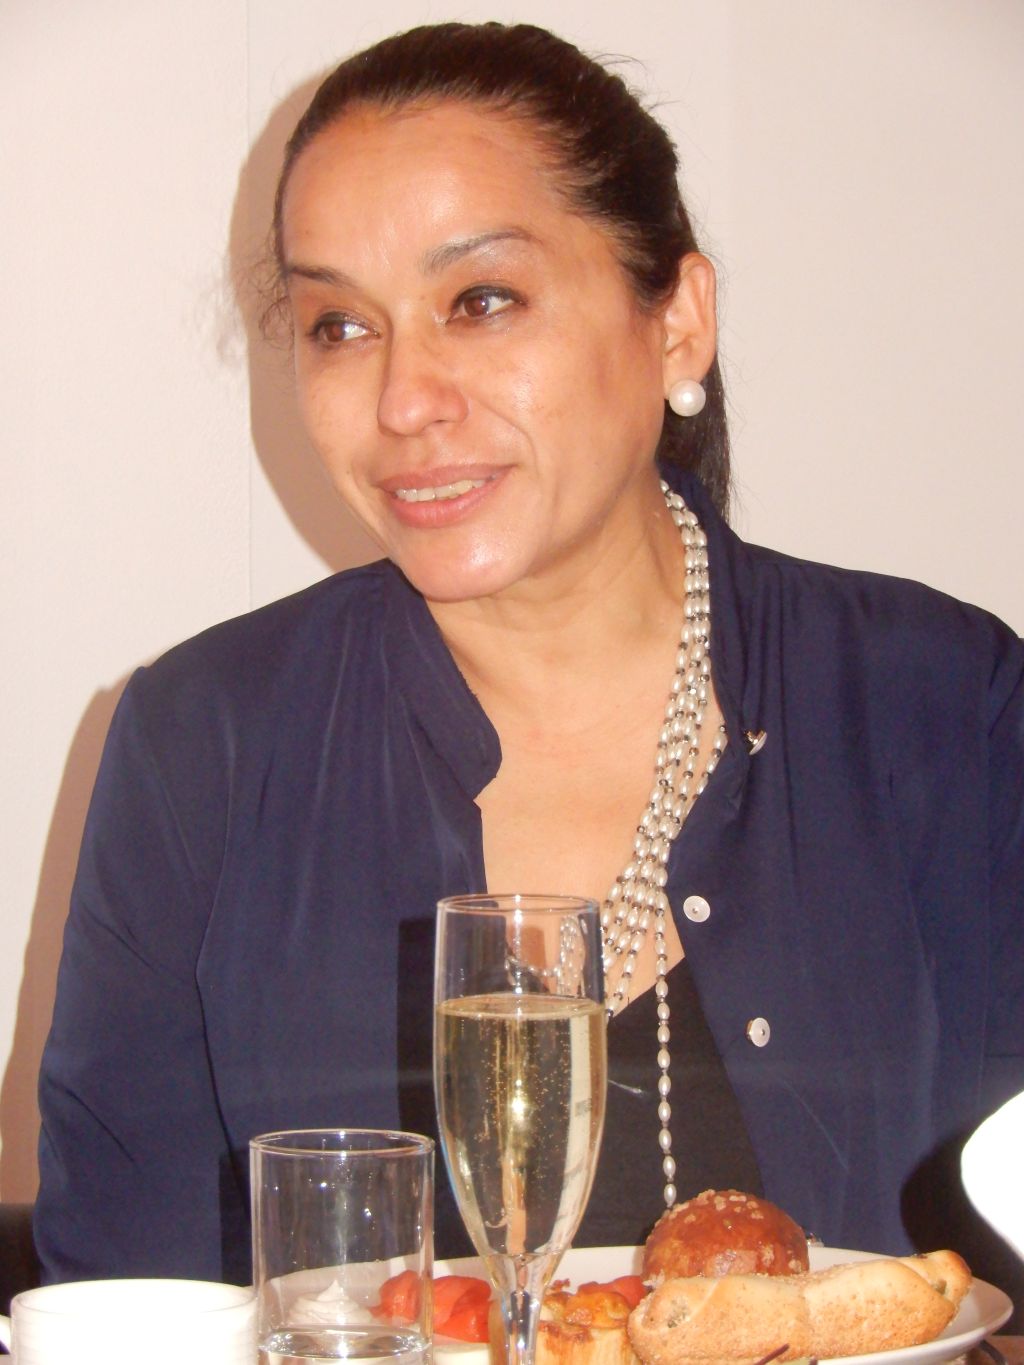 La embajadora Adis Urieta, de negro, con collas blanco, sonriente